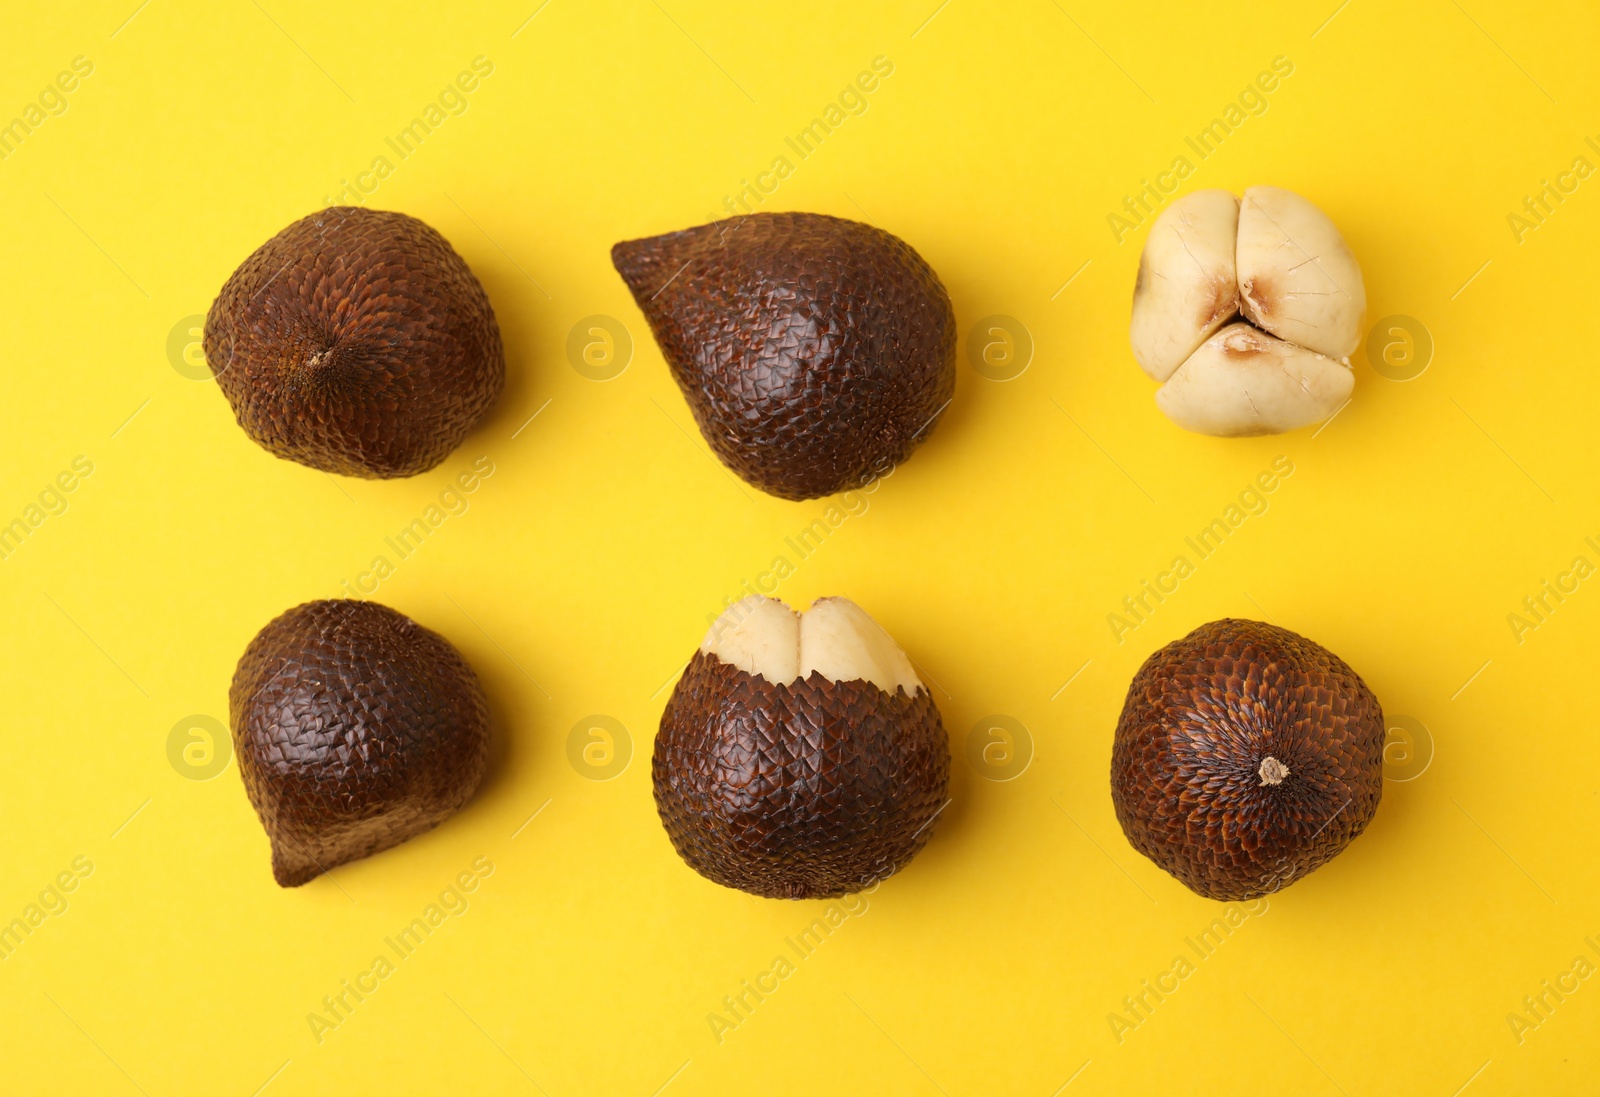 Photo of Fresh salak fruits on yellow background, flat lay